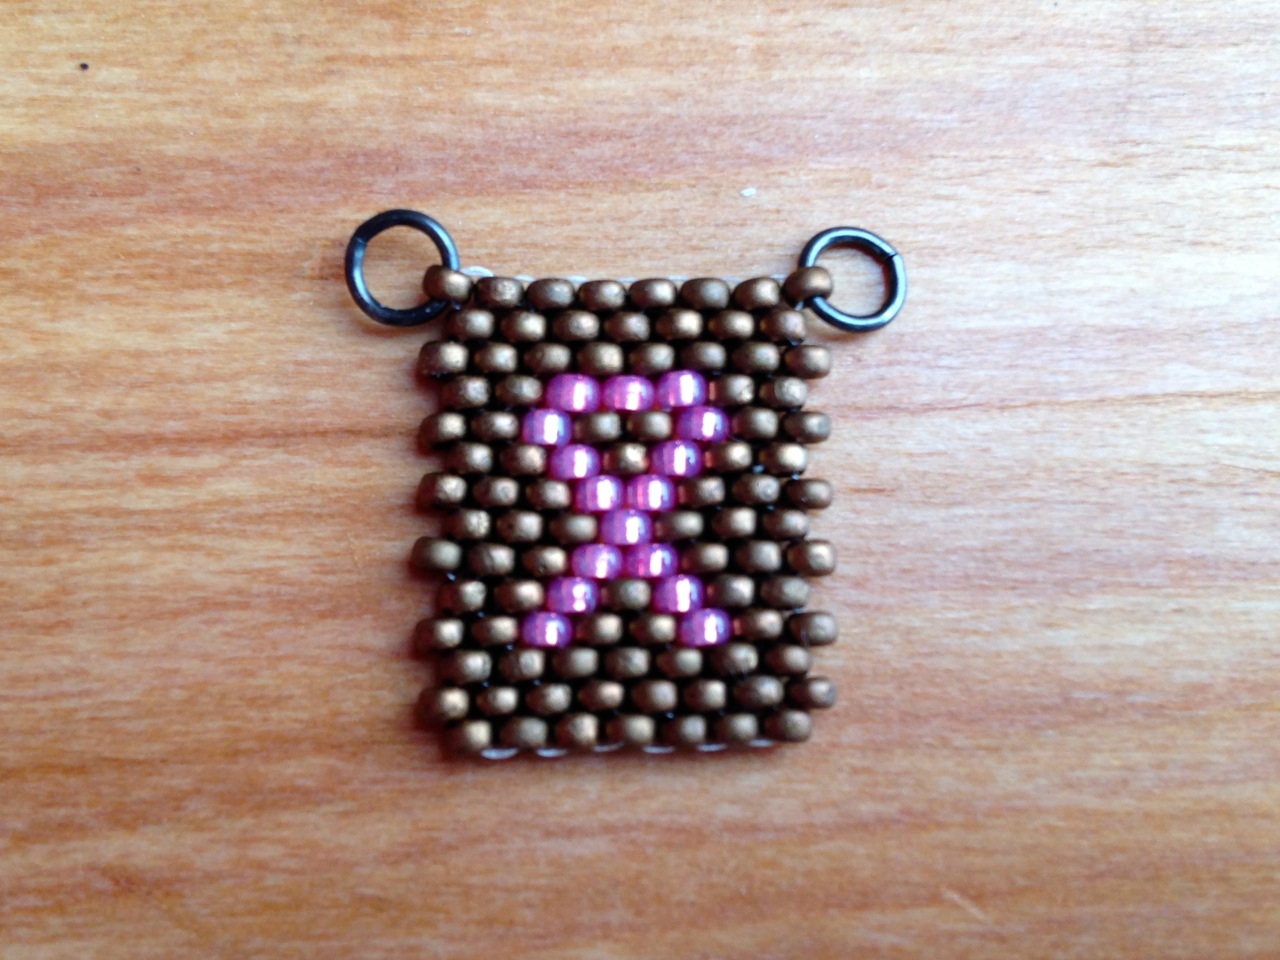 Breast Cancer Awareness Peyote stitch charm